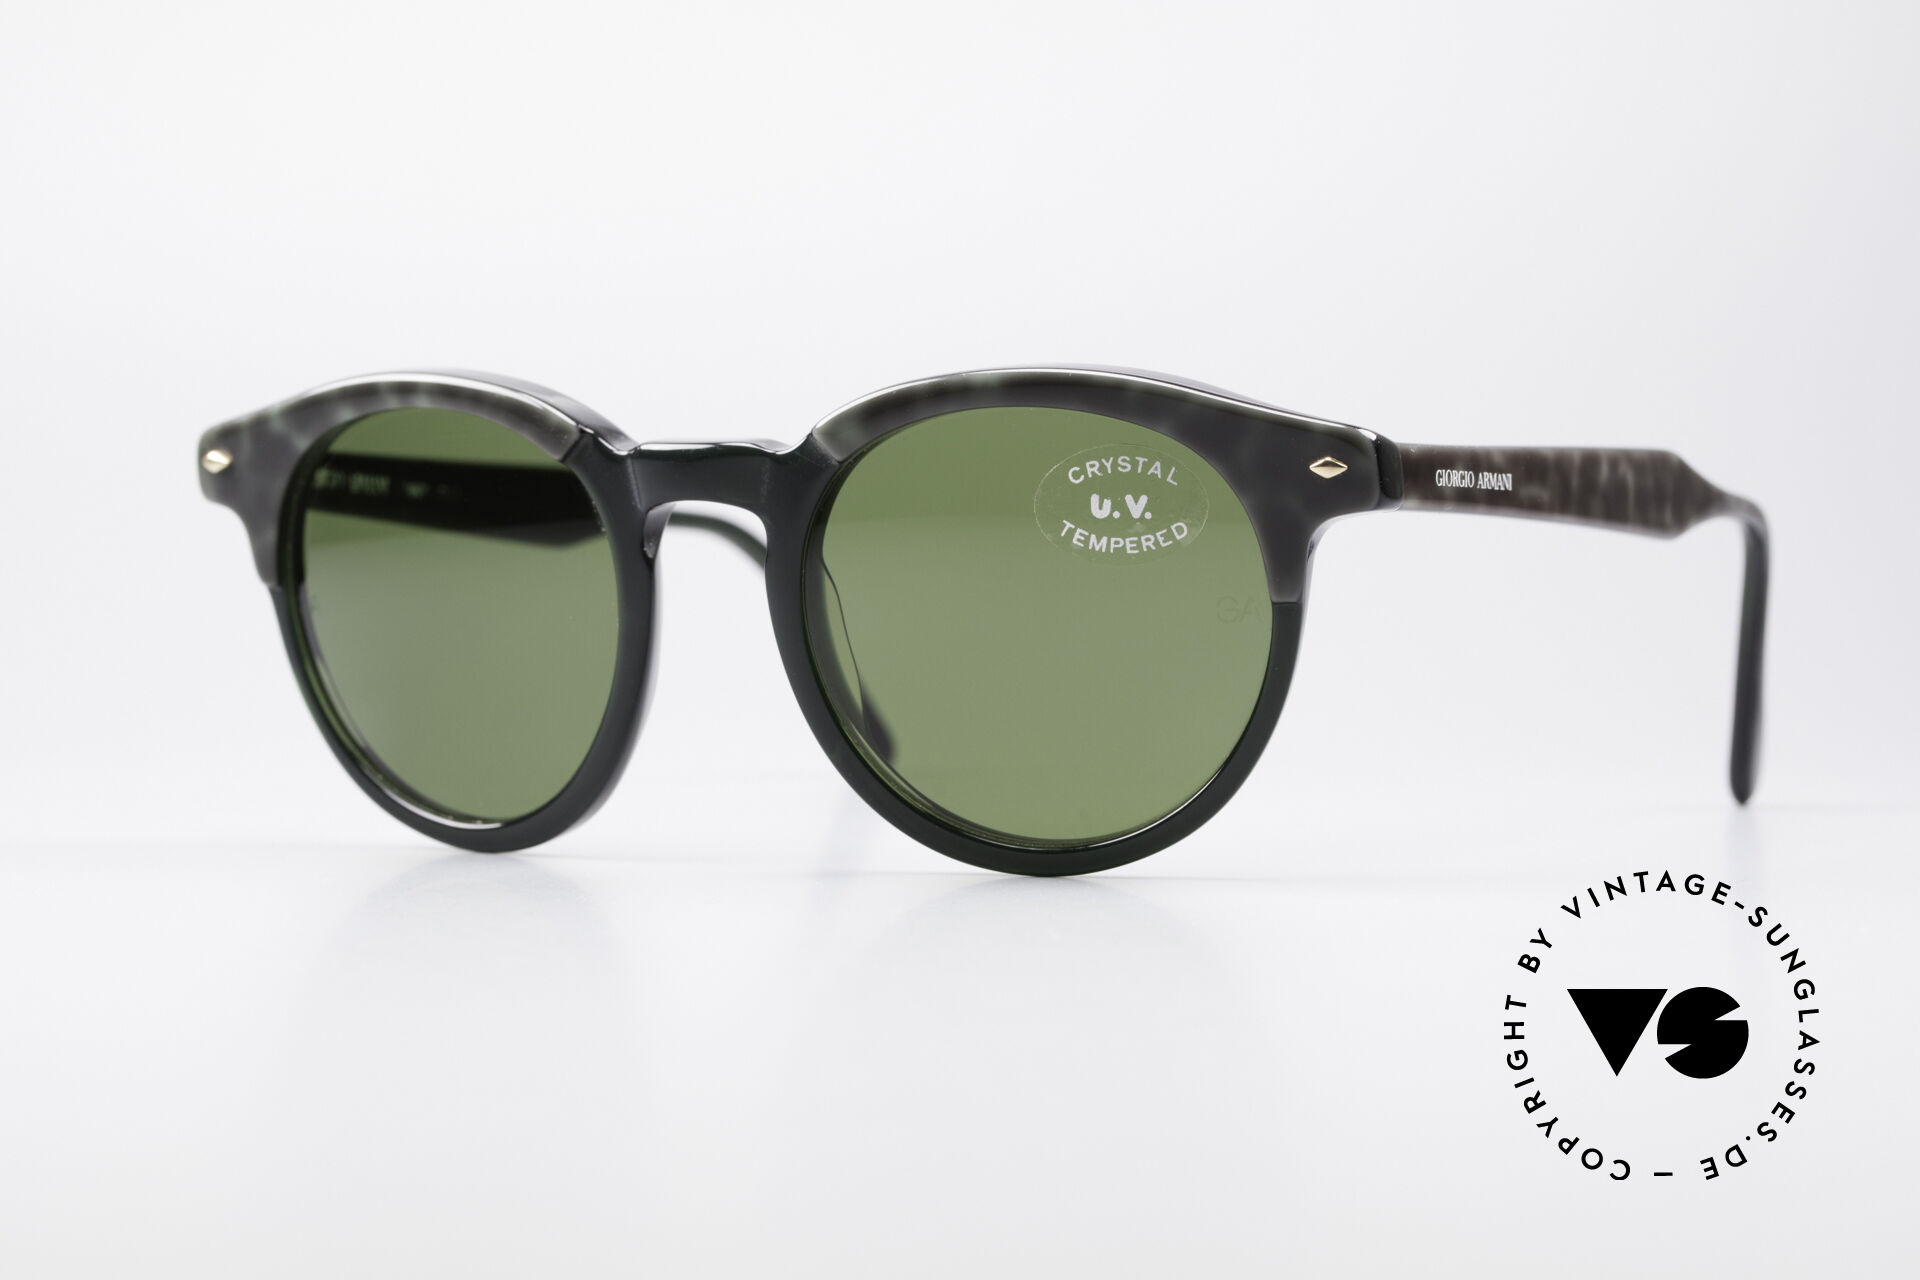 Sunglasses Giorgio Armani 901 Johnny Depp Sunglasses